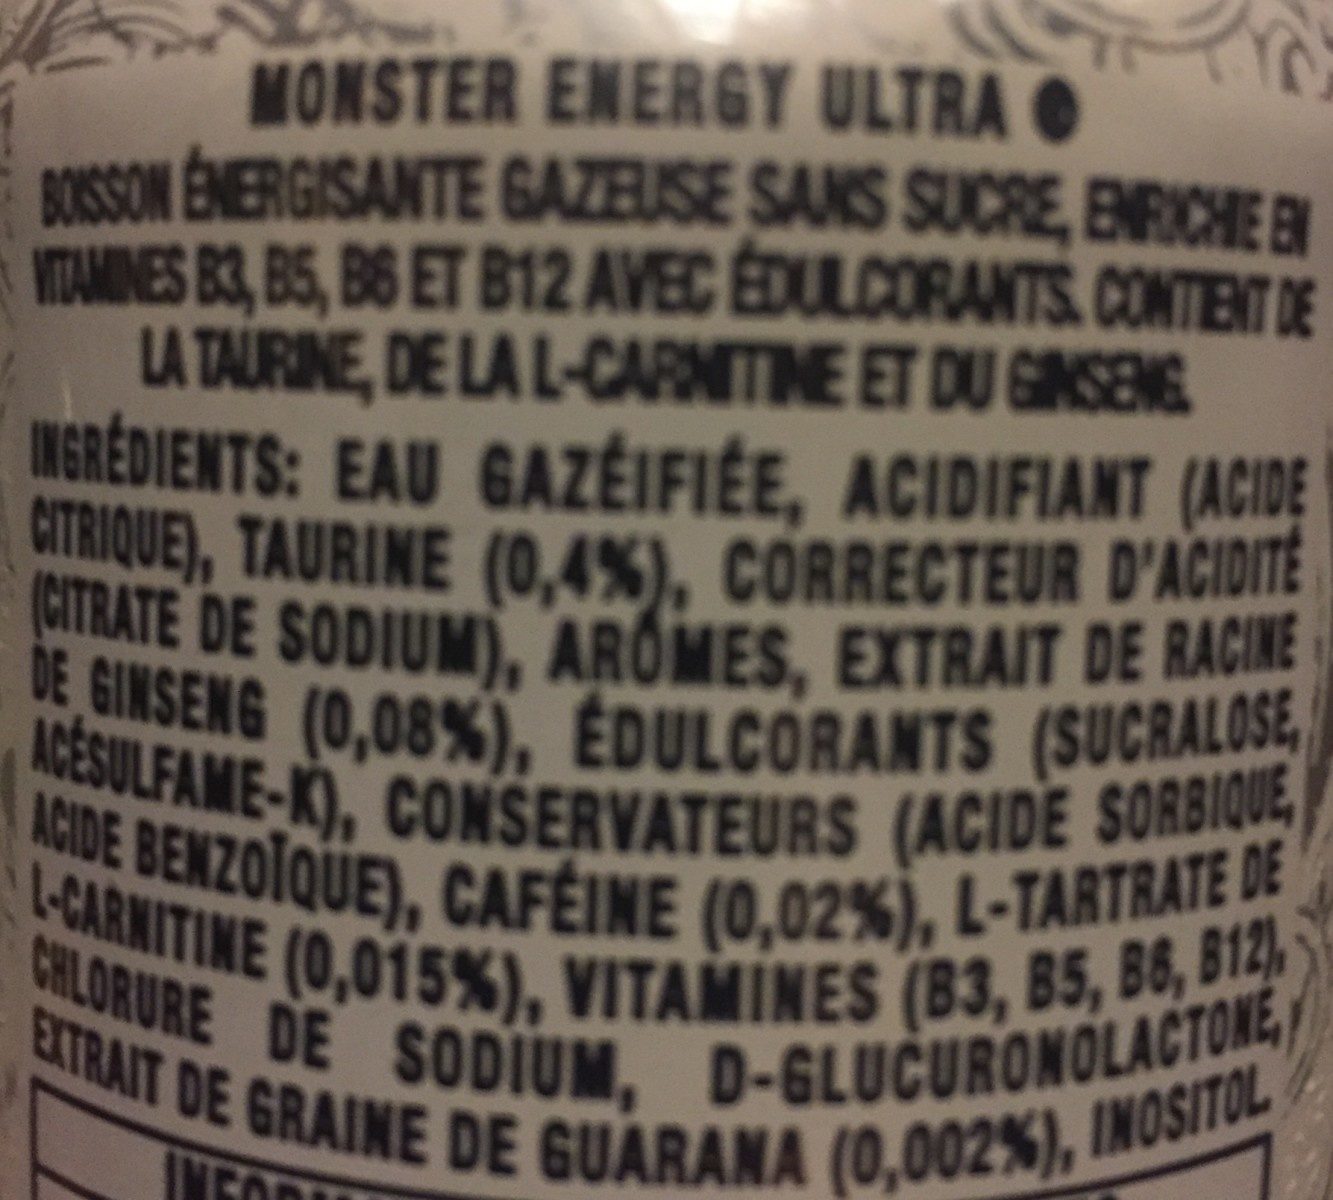 Monster Energy Ultra - Ingrédients